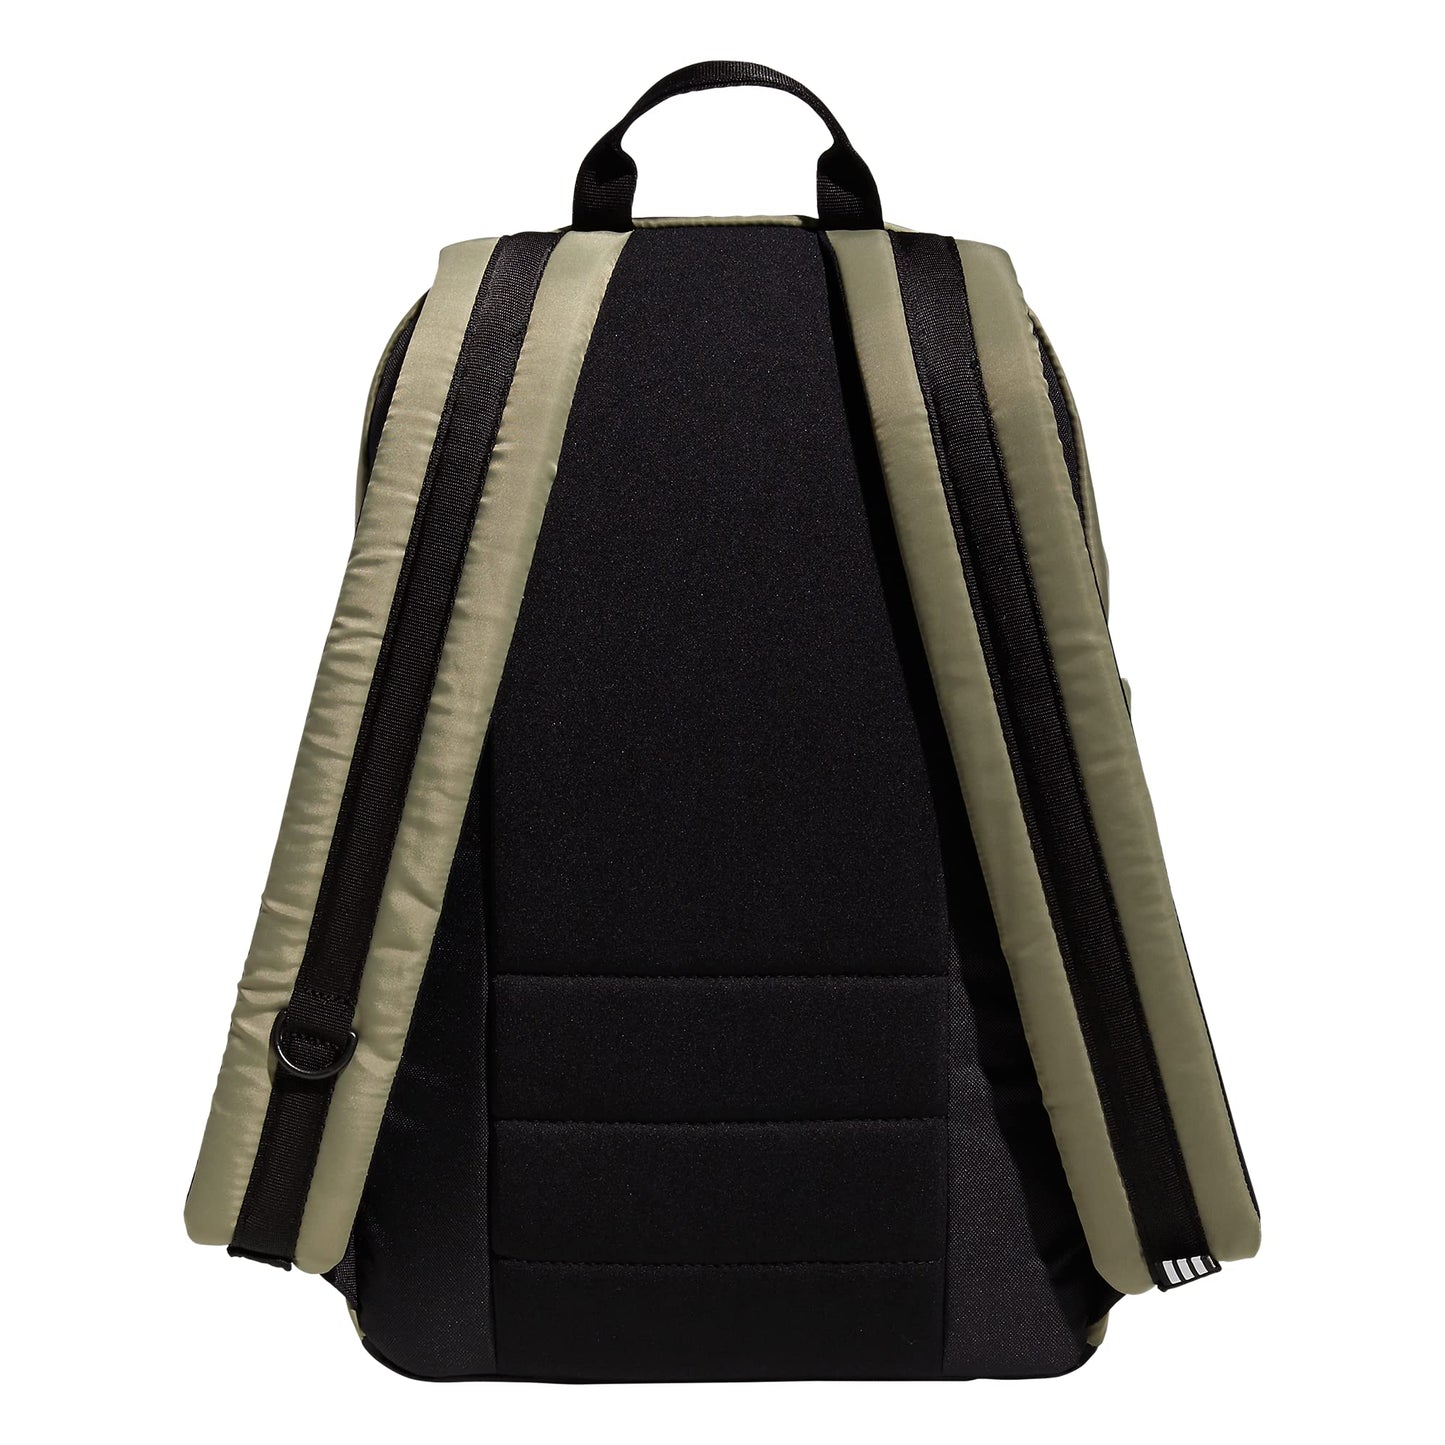 adidas League Three Stripe 2 Backpack